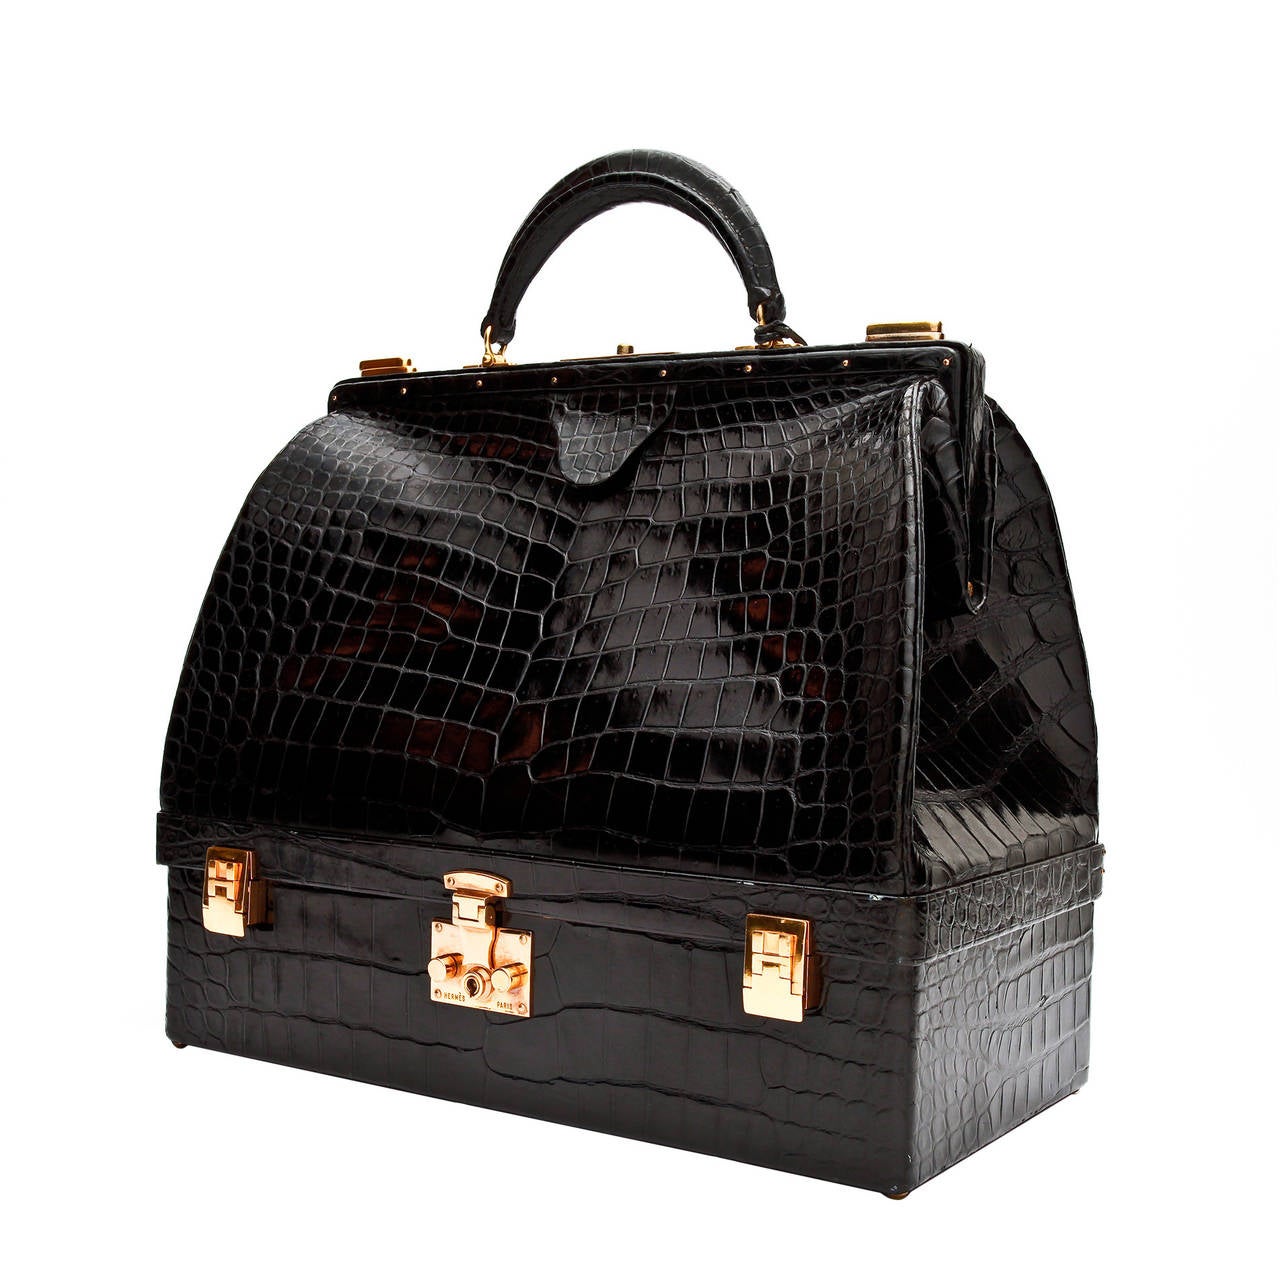 Hermès Black Crocodile Mallette Handbag with Jewel Compartment